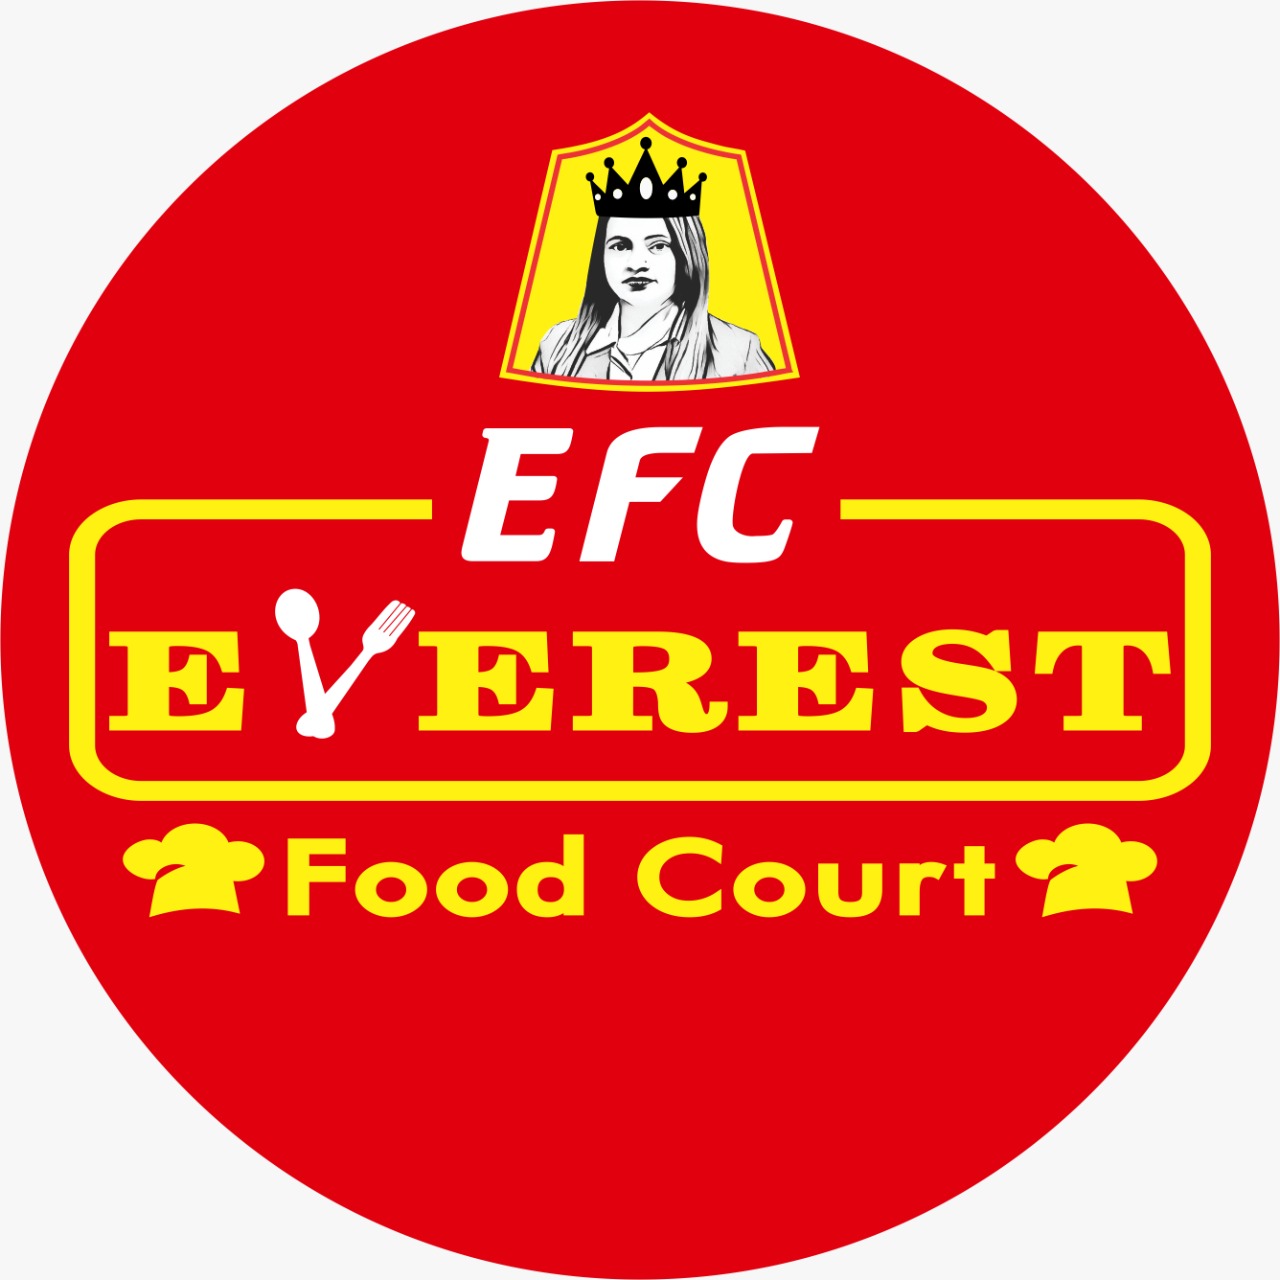 Everest Food Court logo